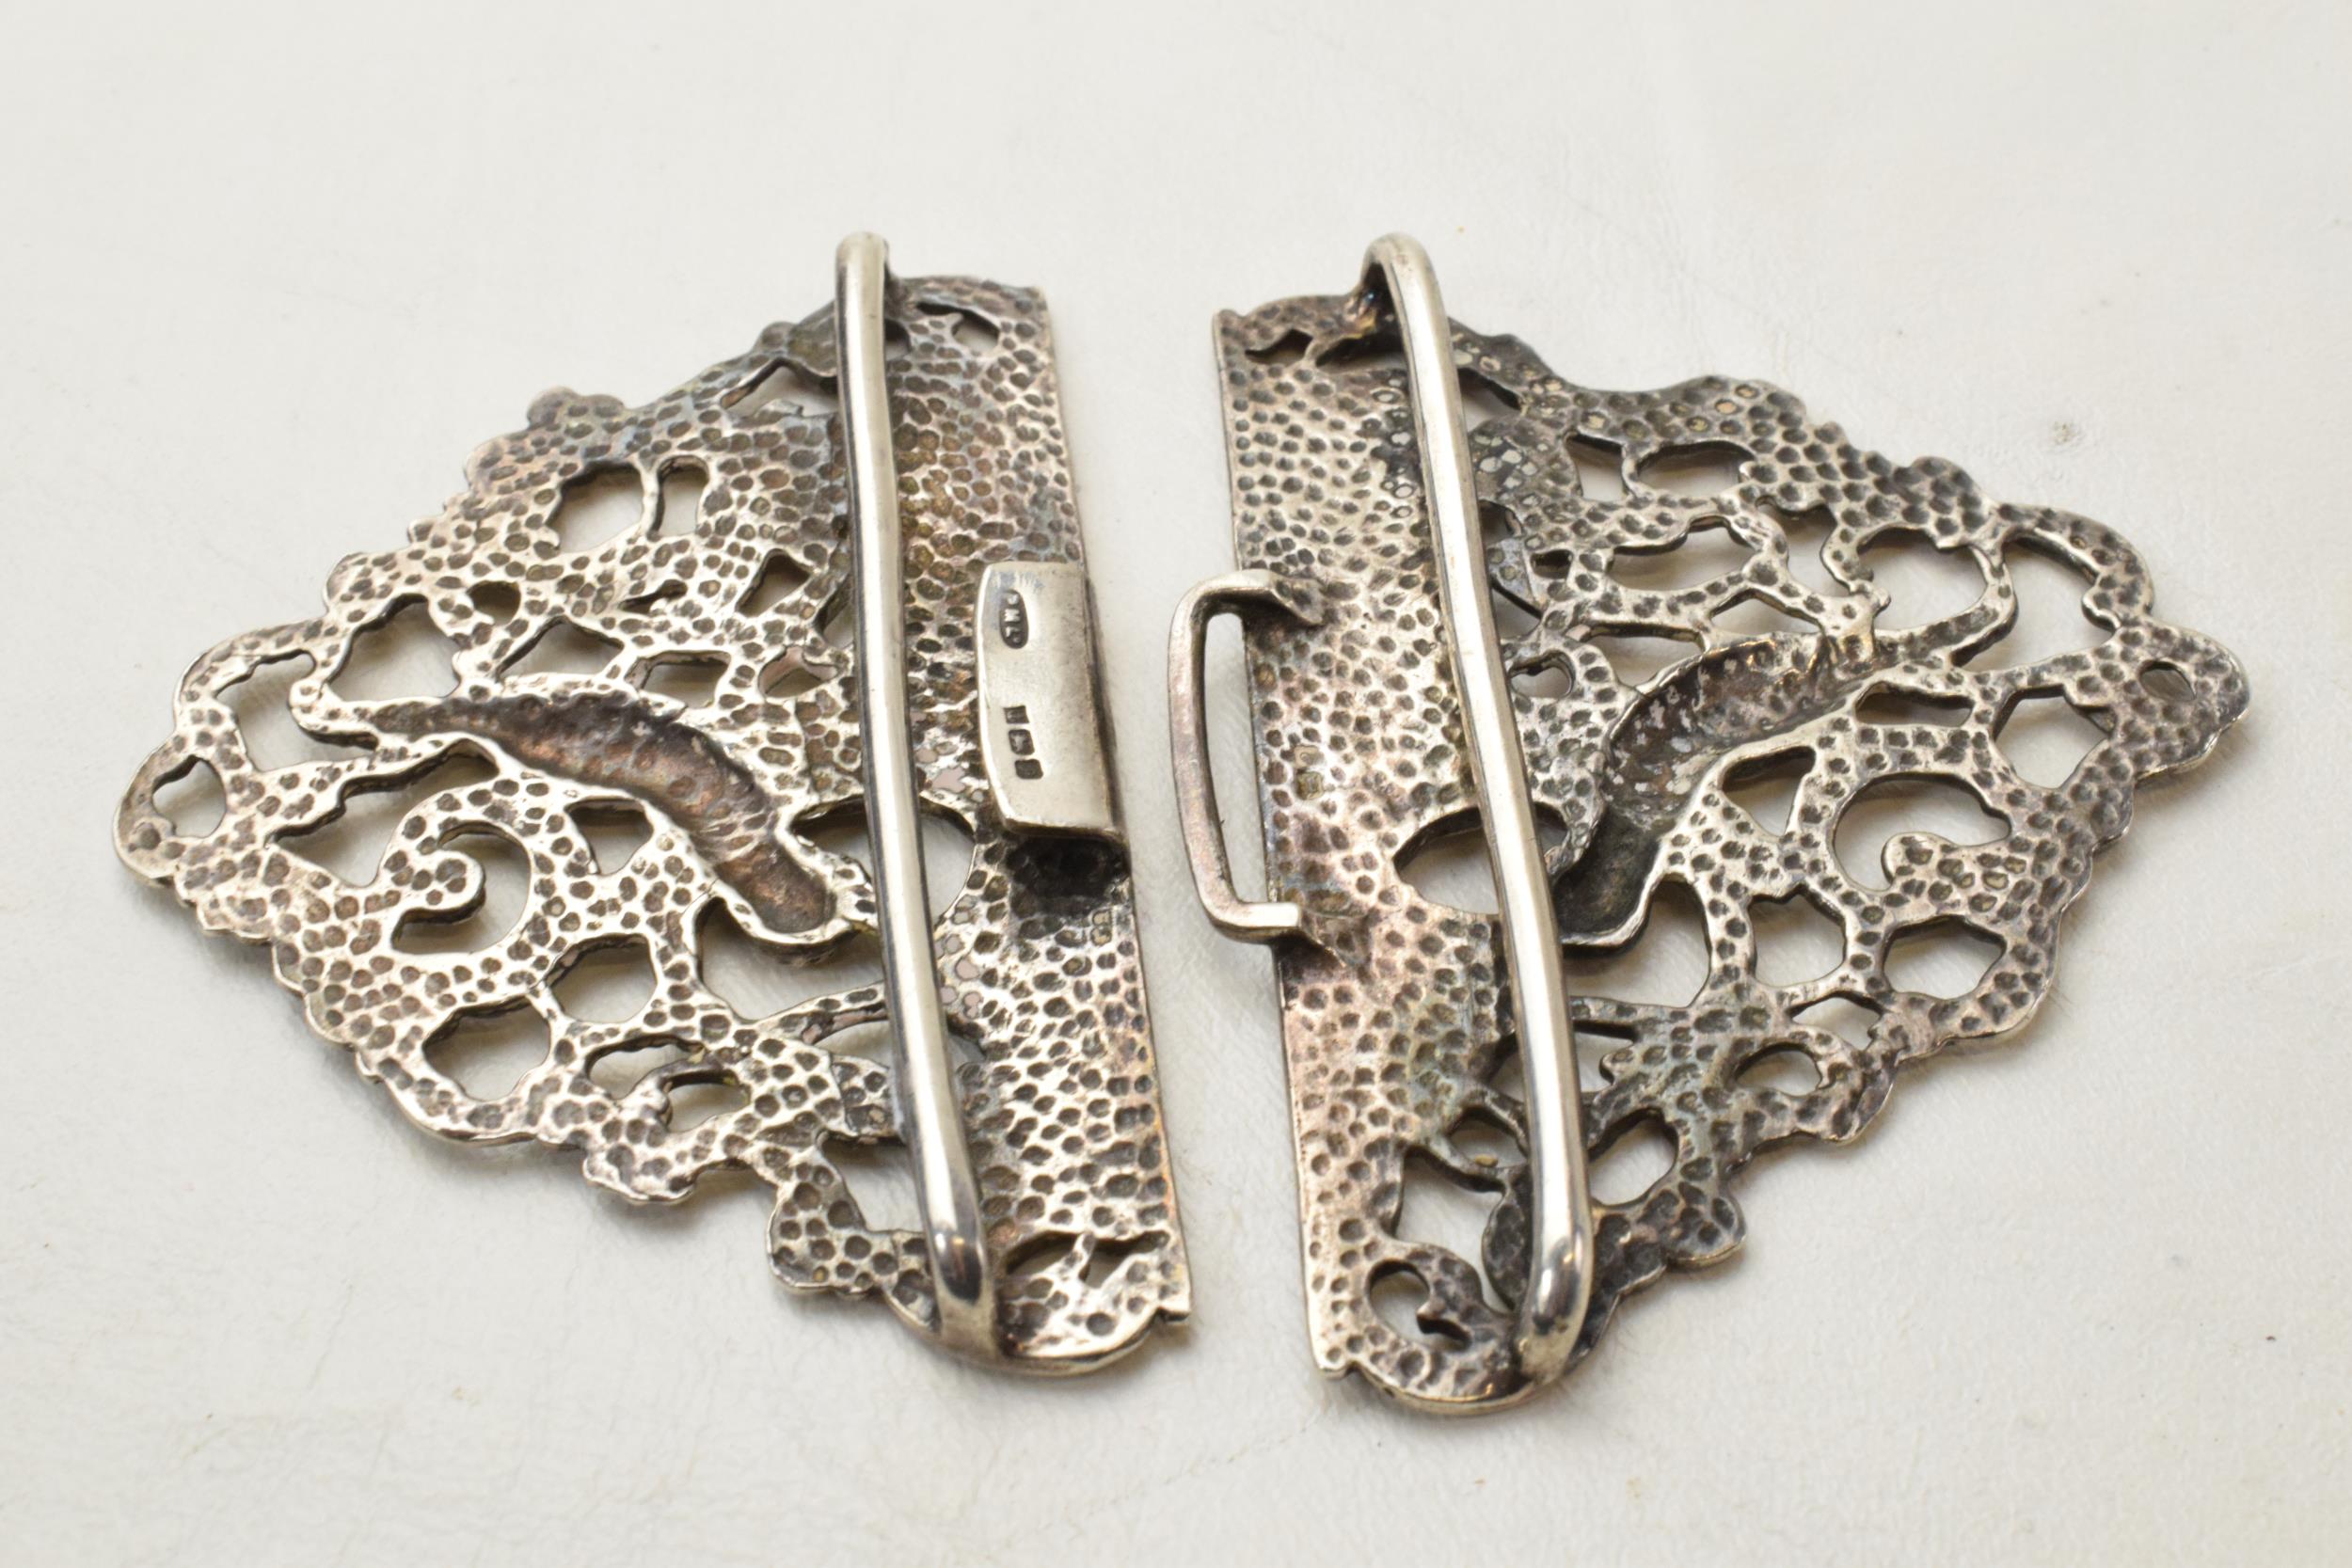 Silver belt buckle with cherub decoration, Birmingham 1964, 50.8 grams. - Image 2 of 2